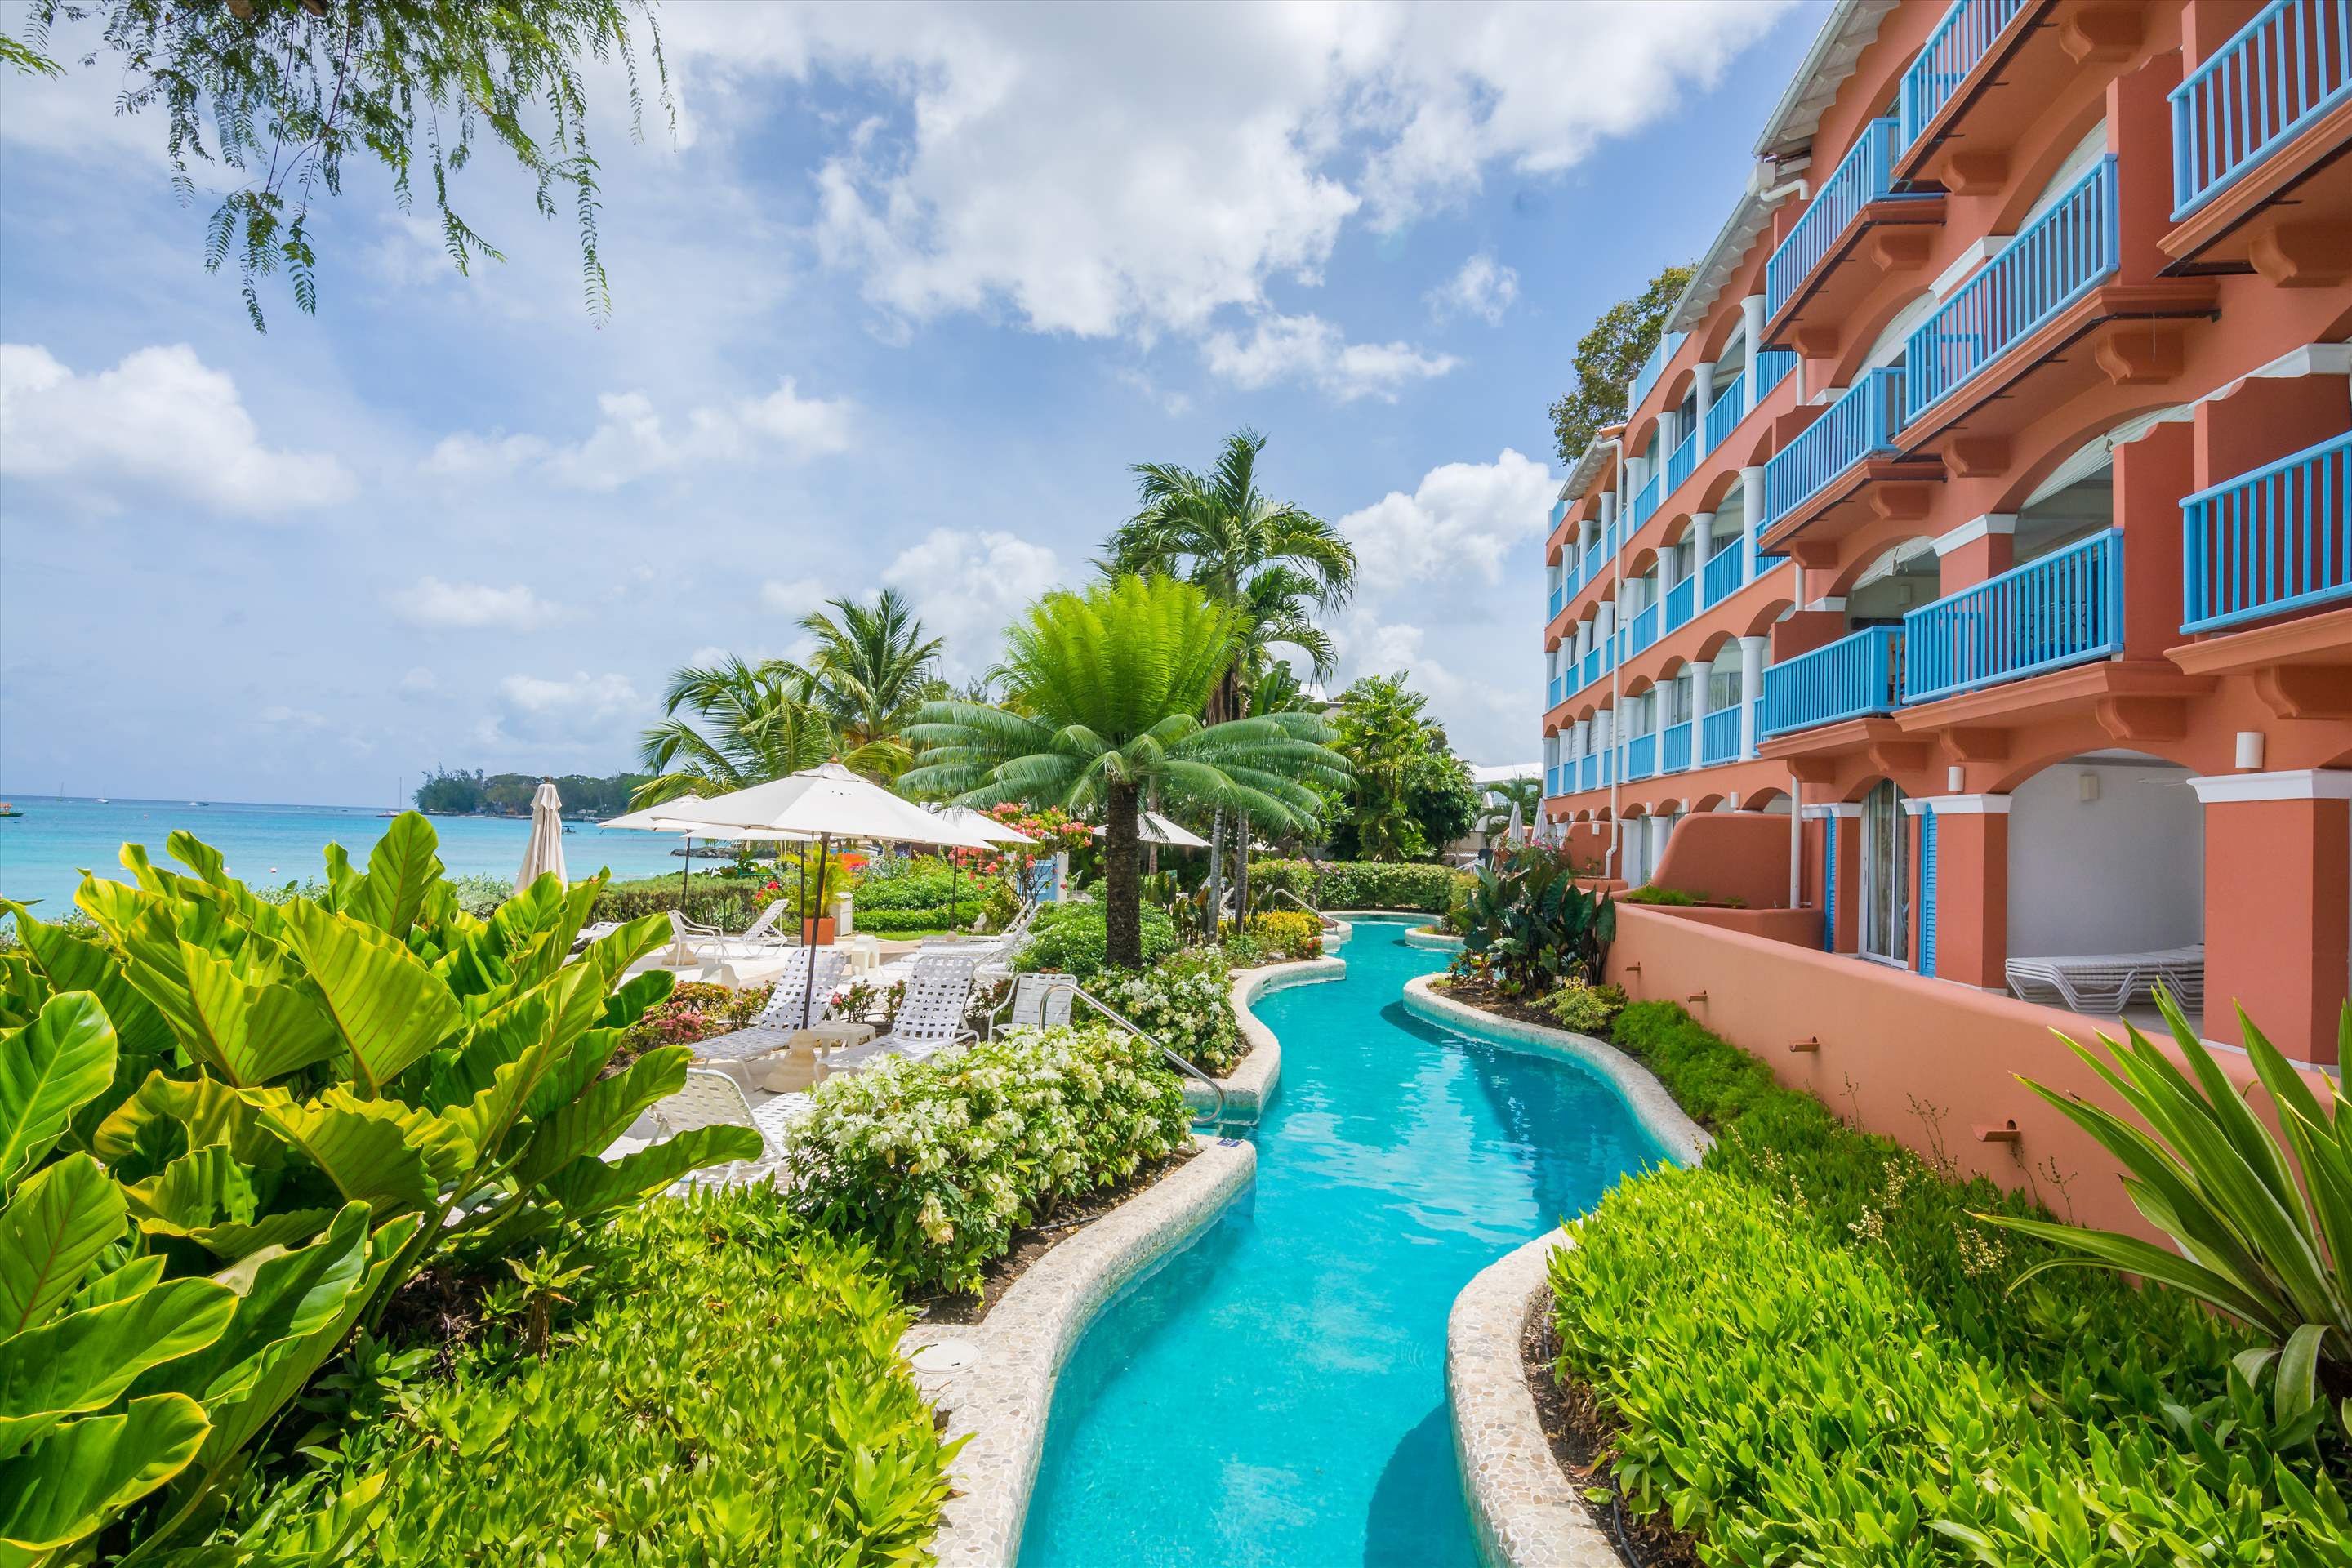 Villas on the Beach 201 , 2 bedroom, 2 bedroom apartment in St. James & West Coast, Barbados Photo #5